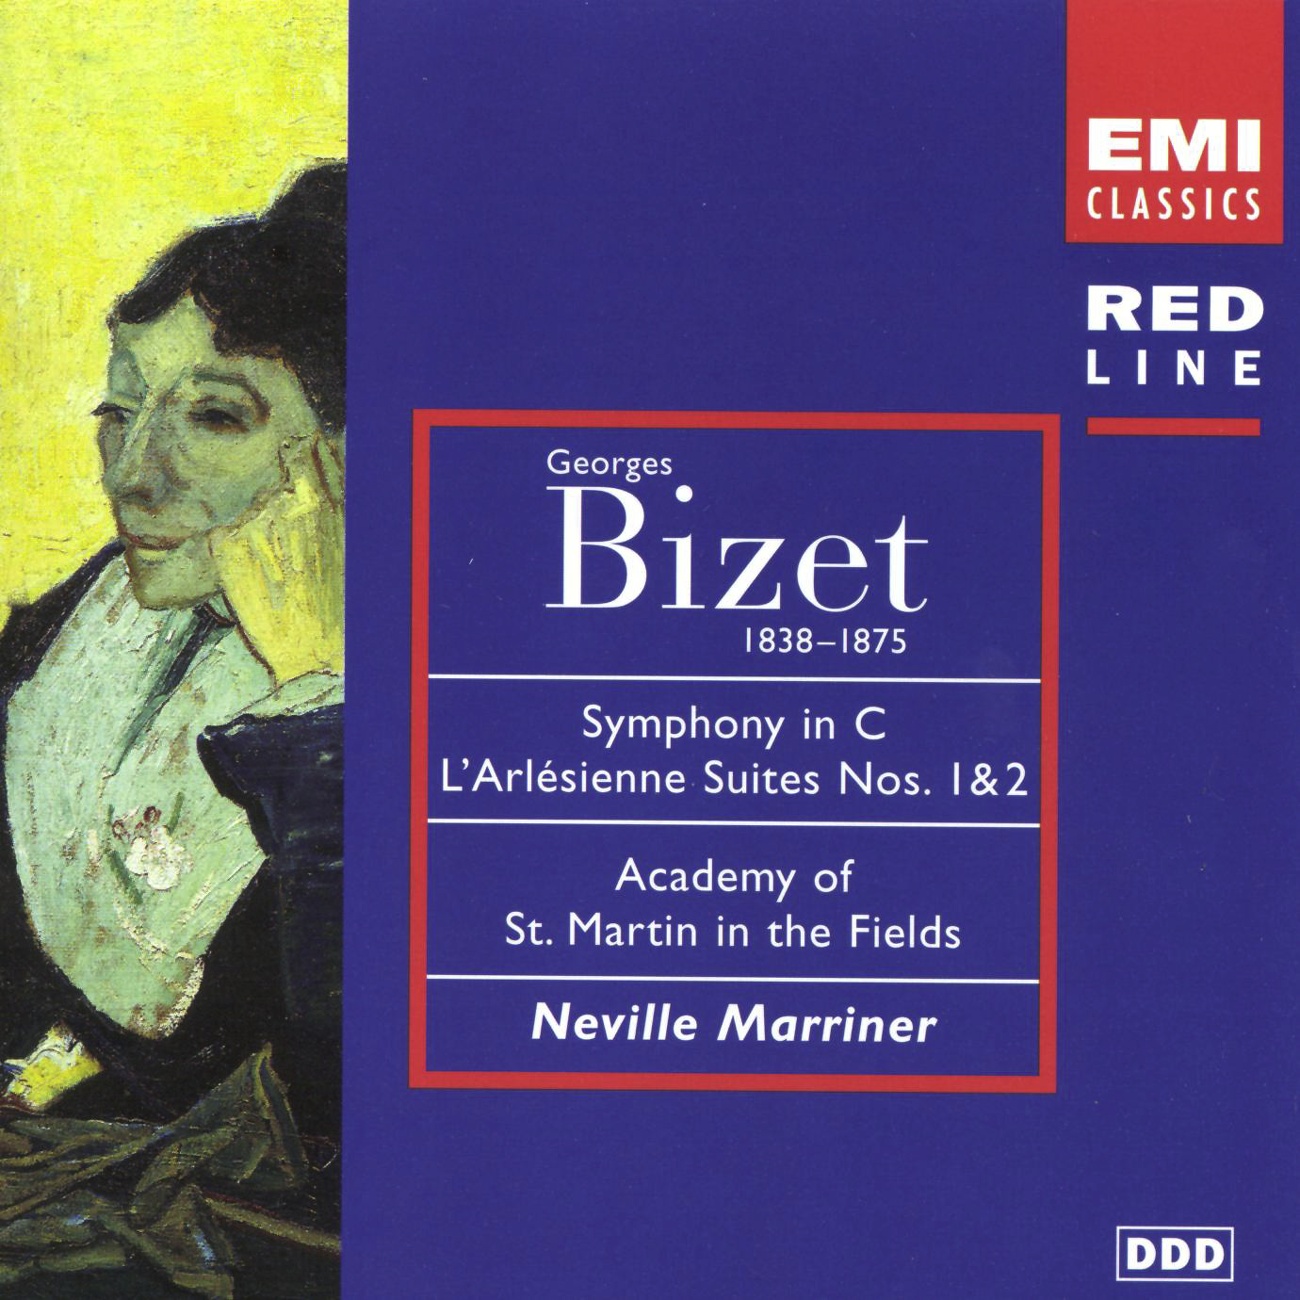 Intermezzo (Arlesienne Suite No 2, Movement 2)